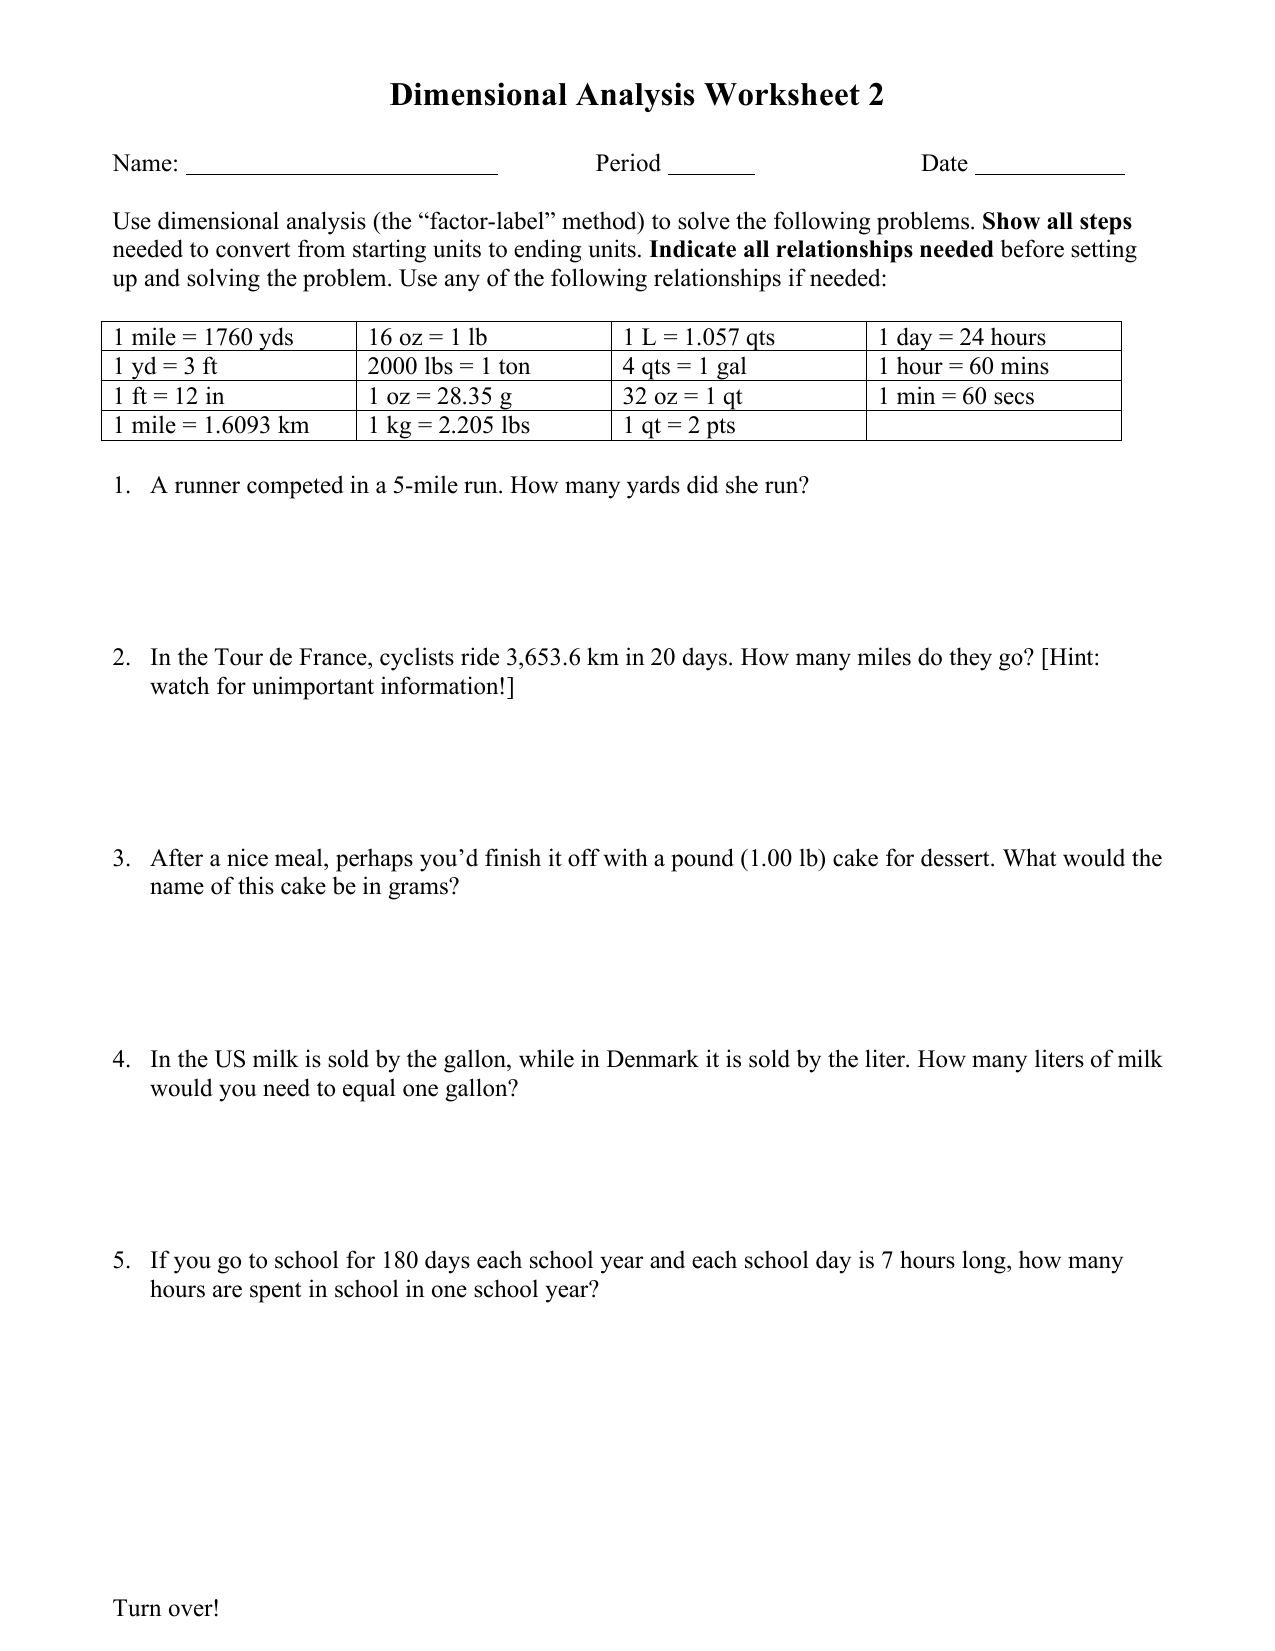 Dimensional Analysis WS 20 Pertaining To Dimensional Analysis Worksheet 2